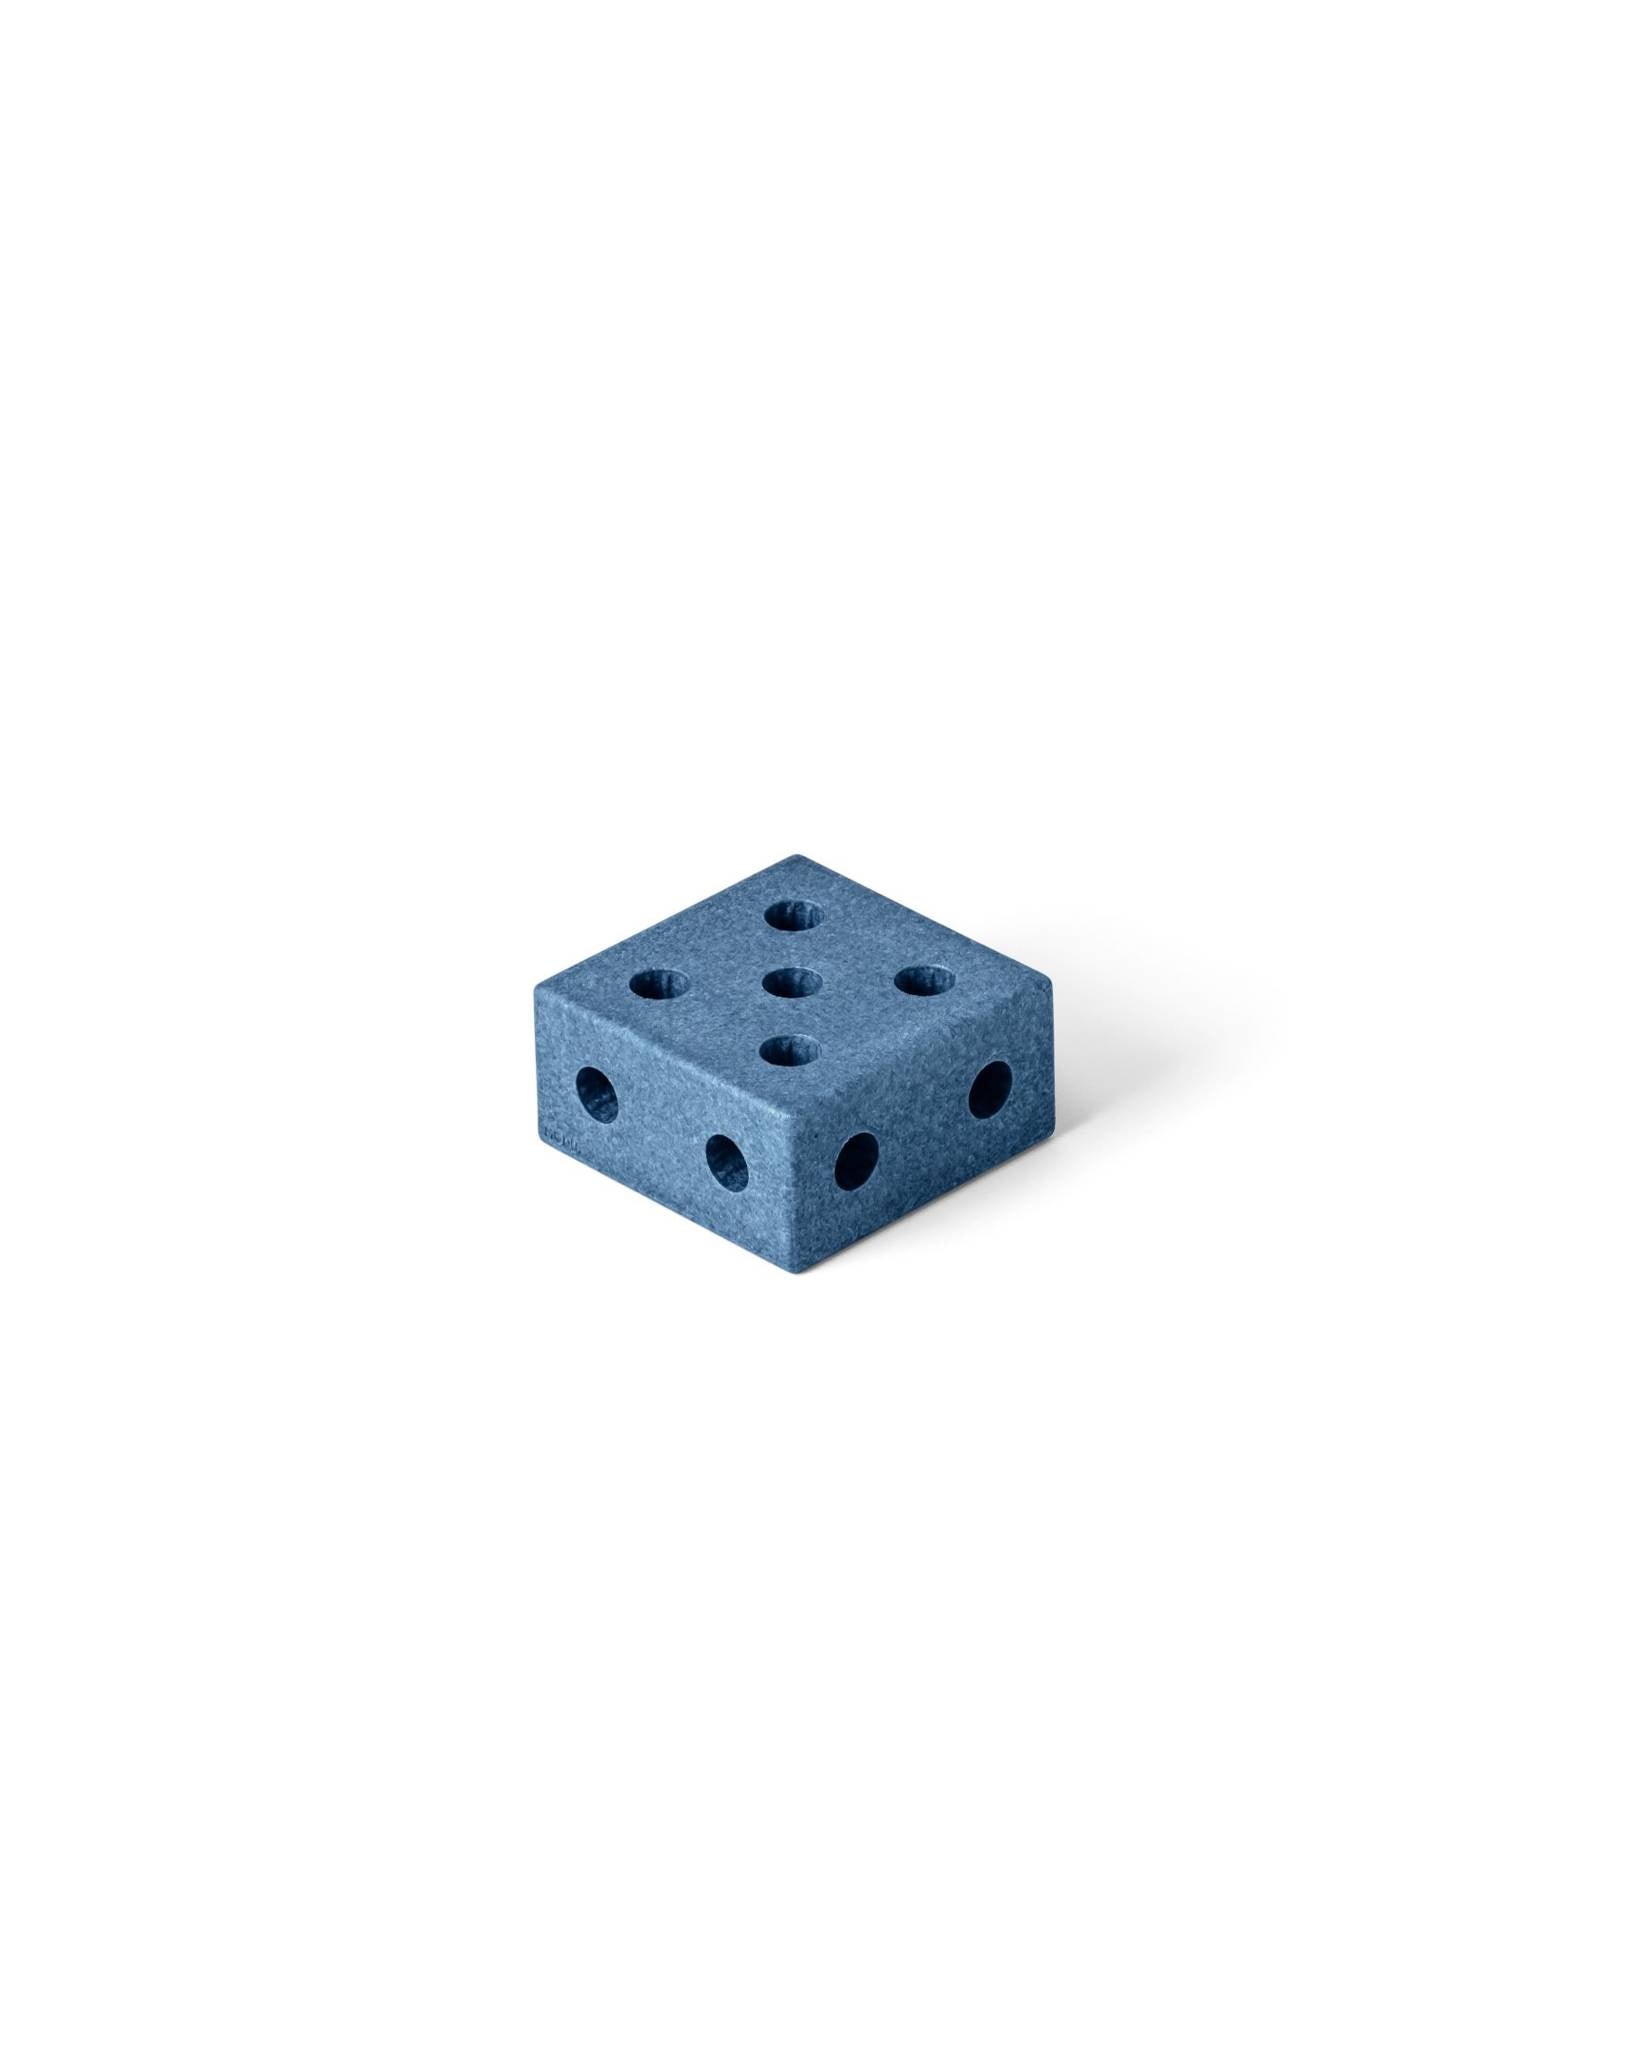 Modul - Blockquadrat - sensorischer Schaumstoffblock, blau